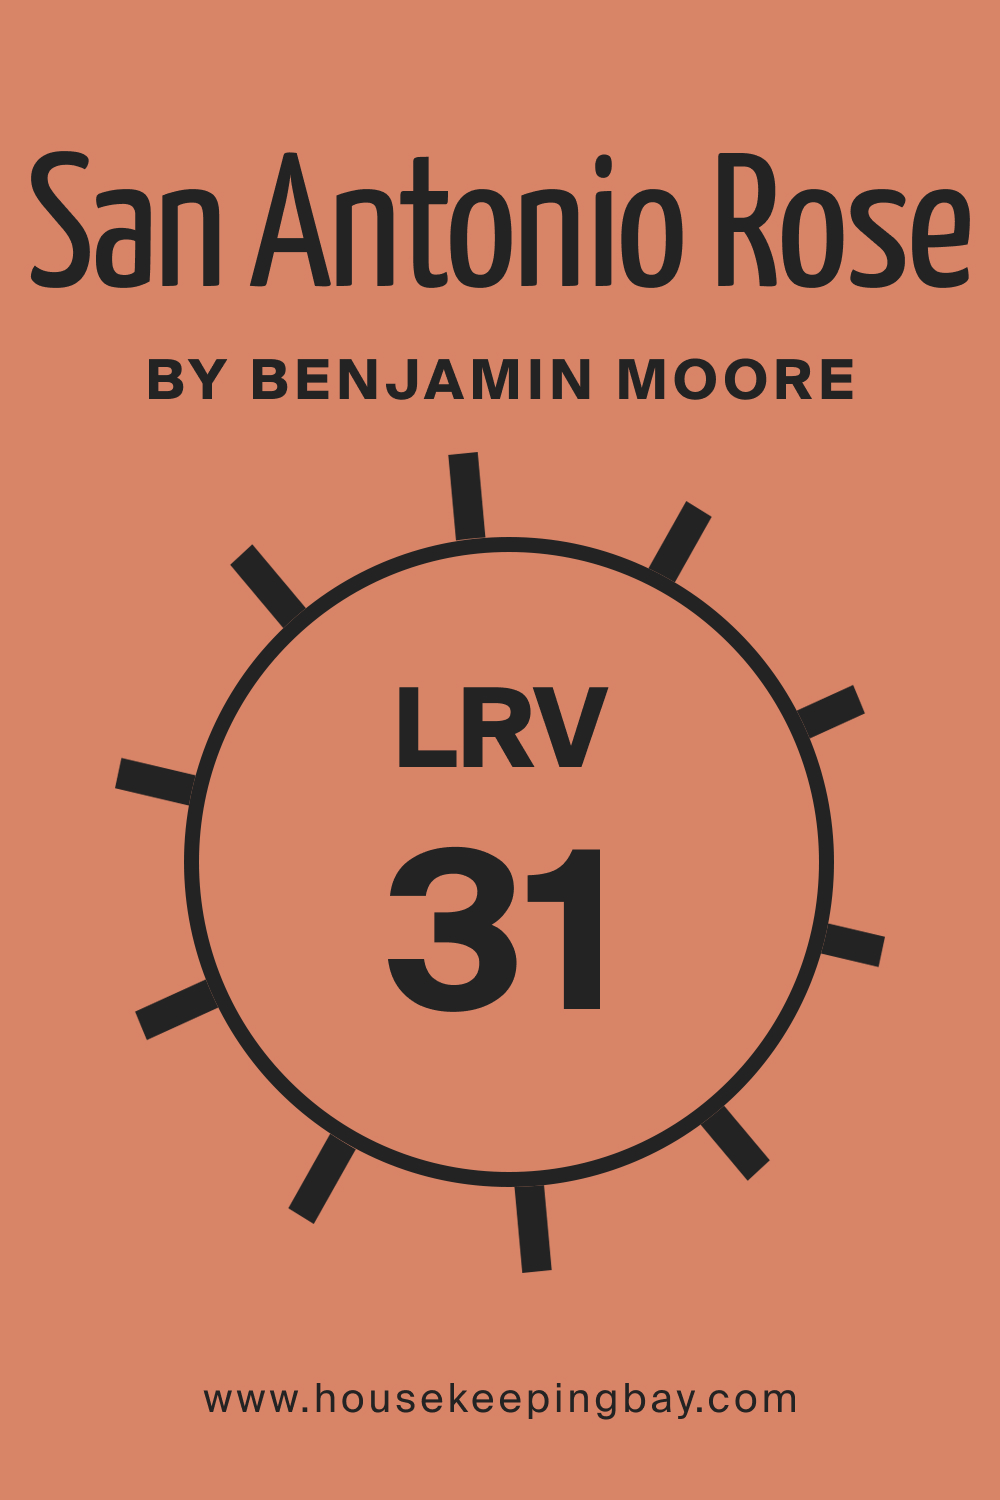 San Antonio Rose 027 by Benjamin Moore. LRV – 31